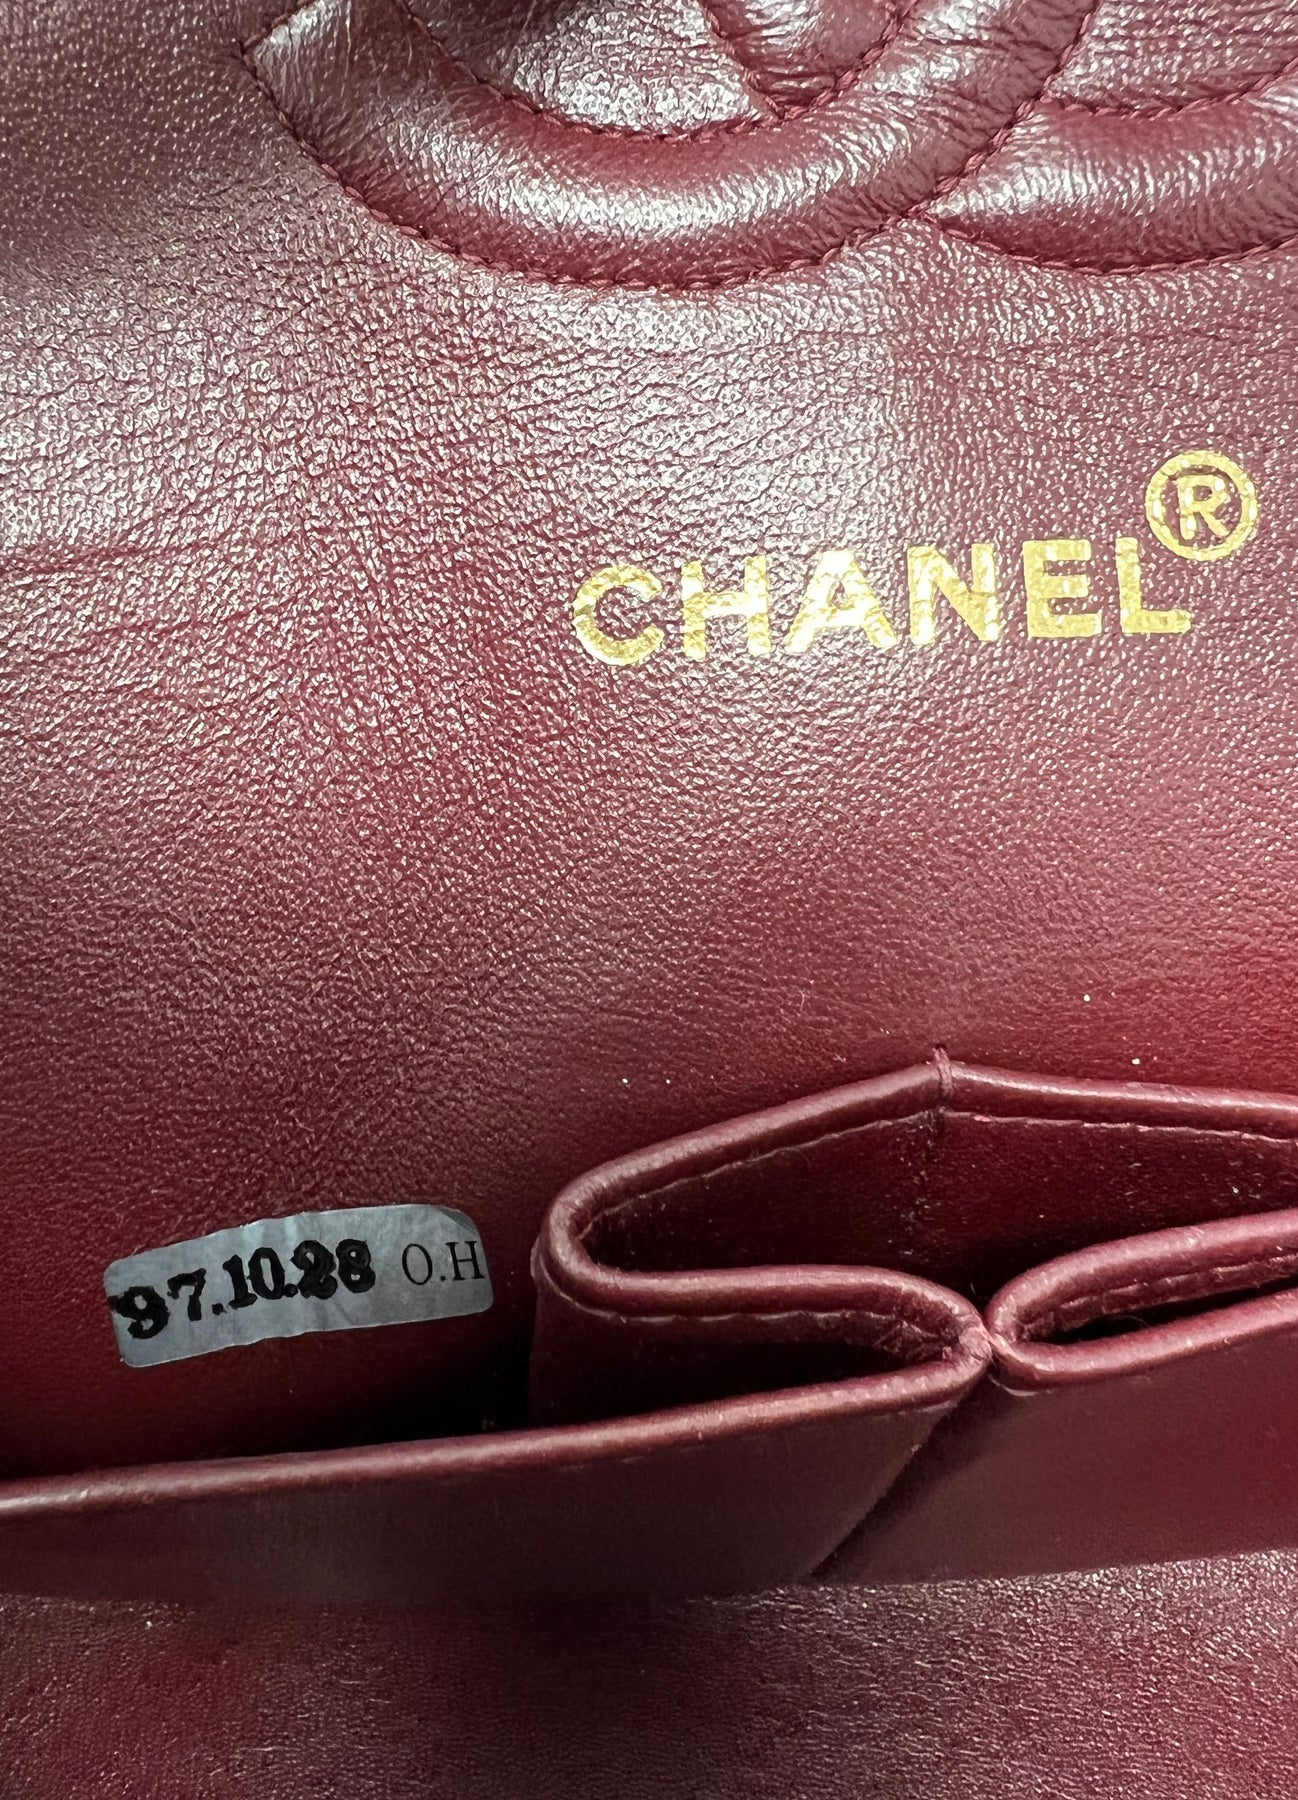 Chanel Timeless Medium flap bag camel caviar leather